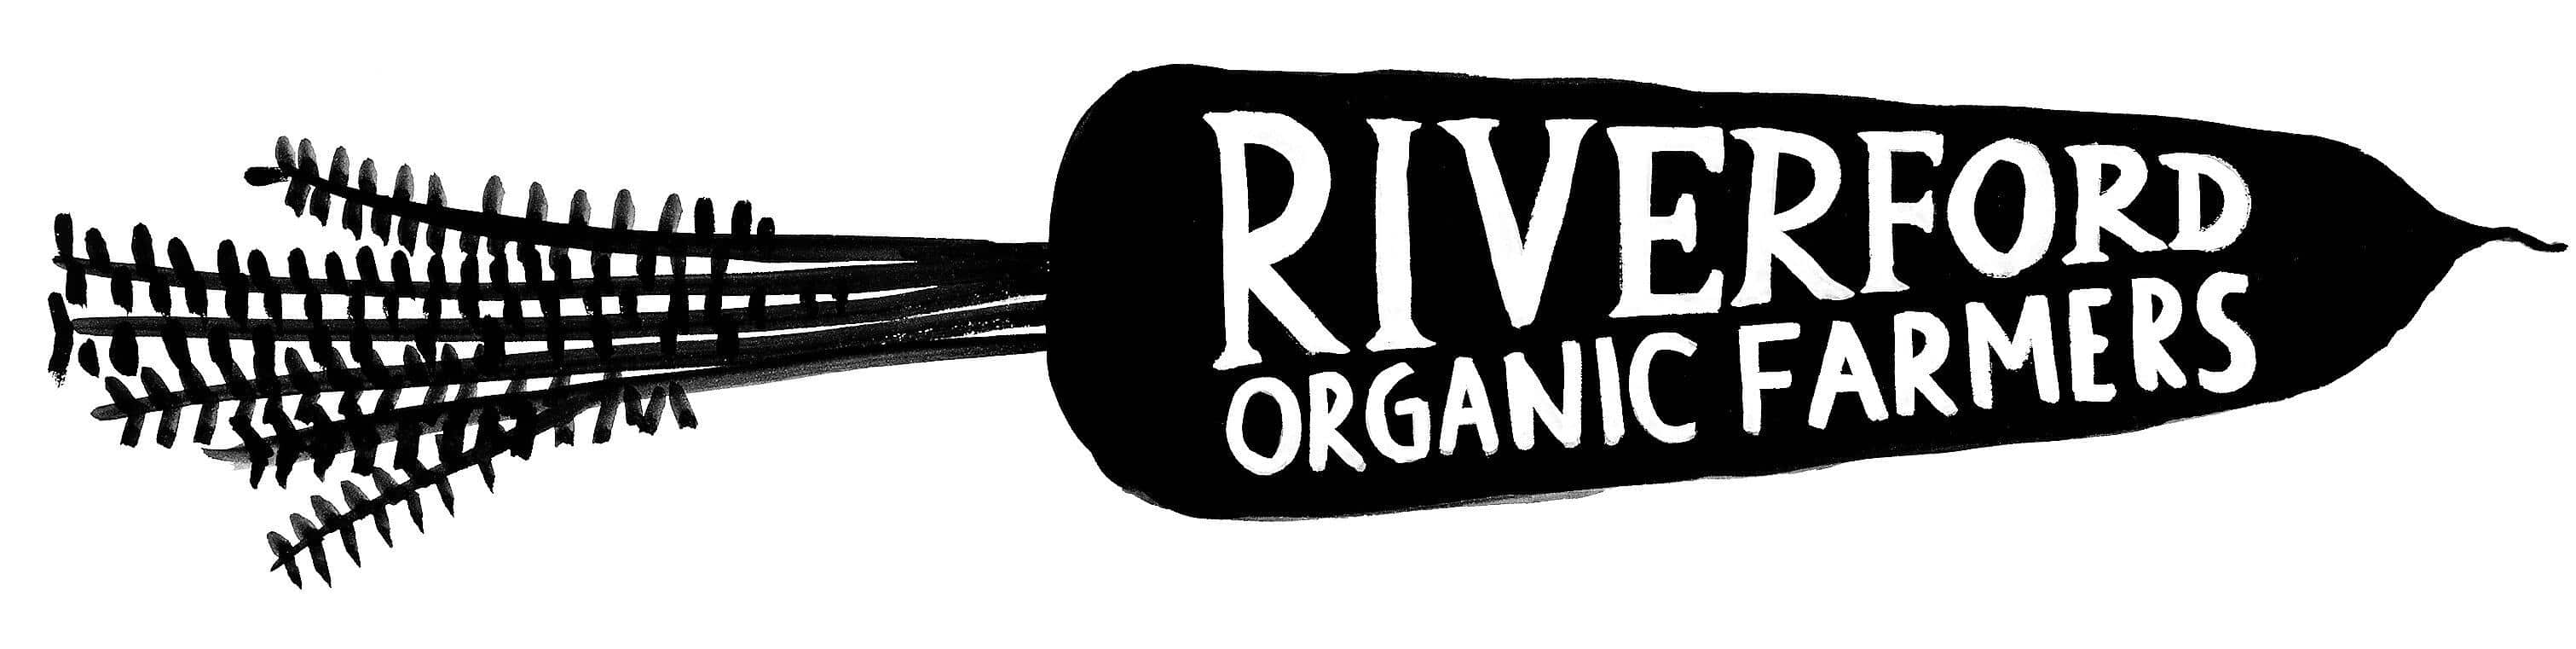 riverford-organic-vegetables_owler_20190107_102035_original